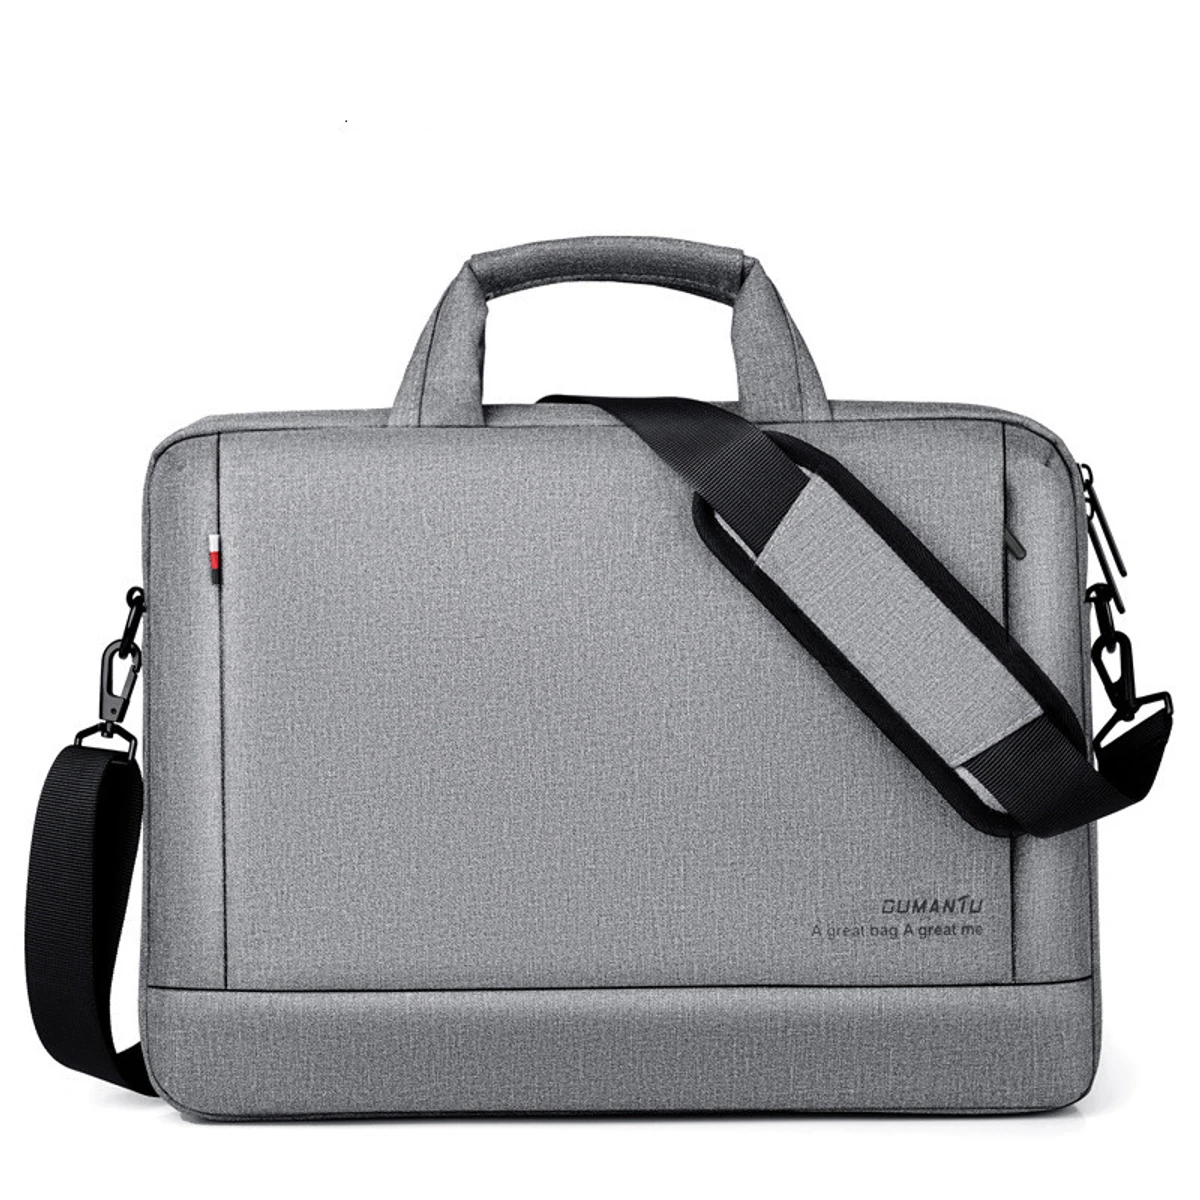 New Laptop Bag Case 15.6, inch Waterproof Notebook Bag for Mackbook Air Pro,15 Inch Laptop Messenger Bag Briefcase